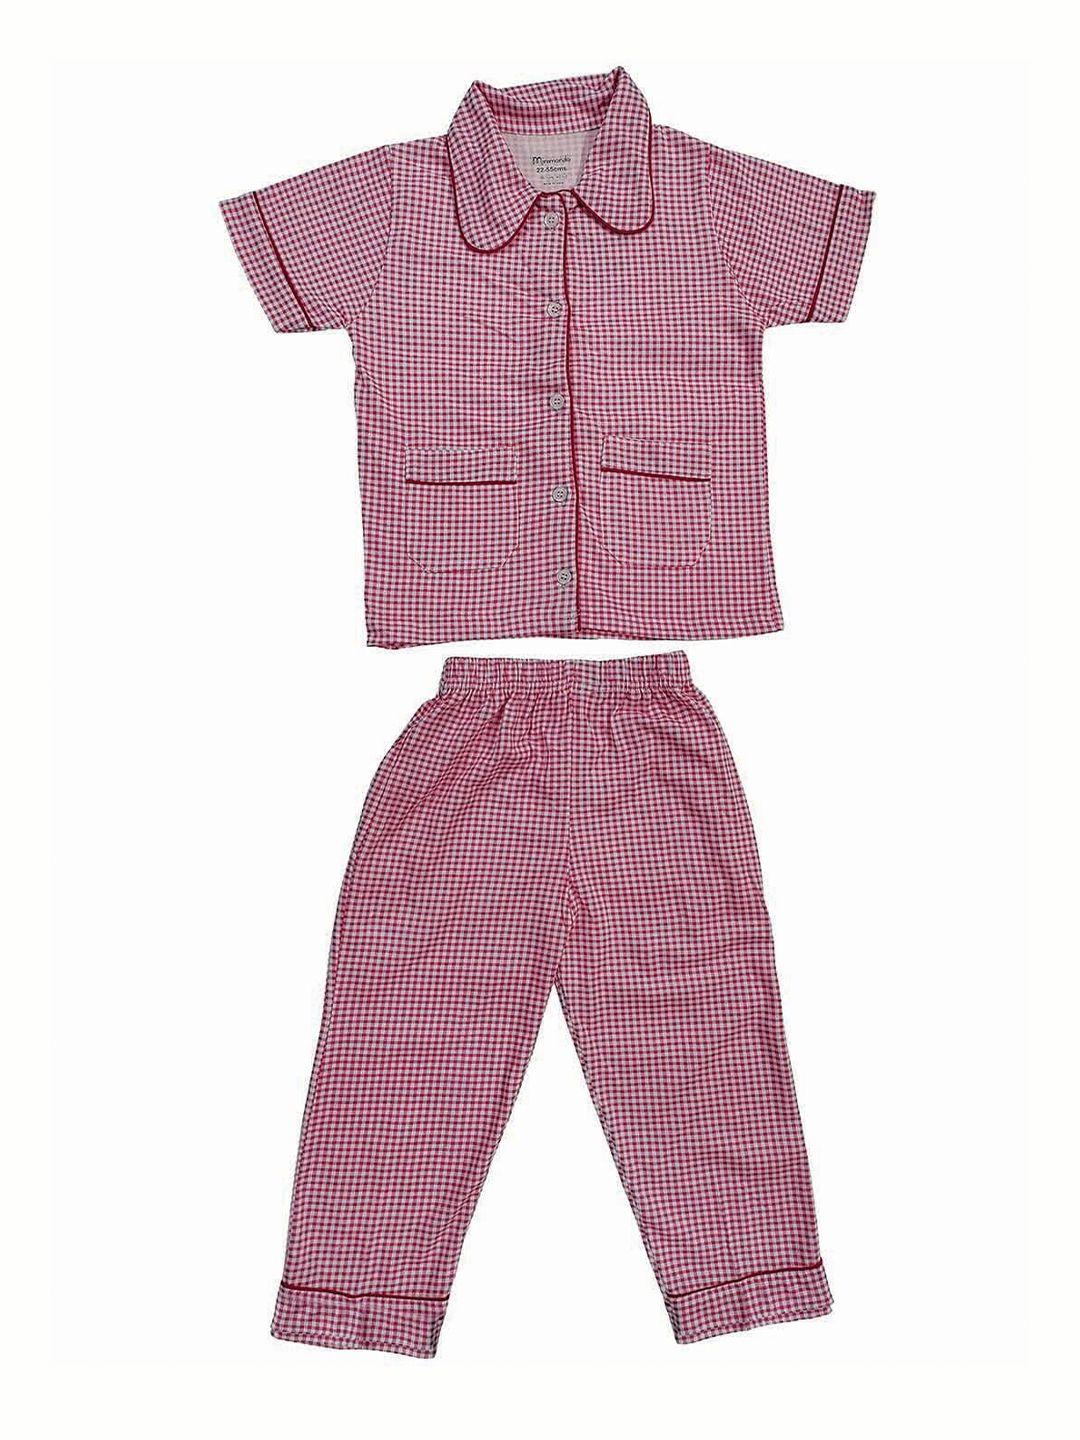 Zoom Minimondo Unisex Kids Red & White Checked clothing set Set